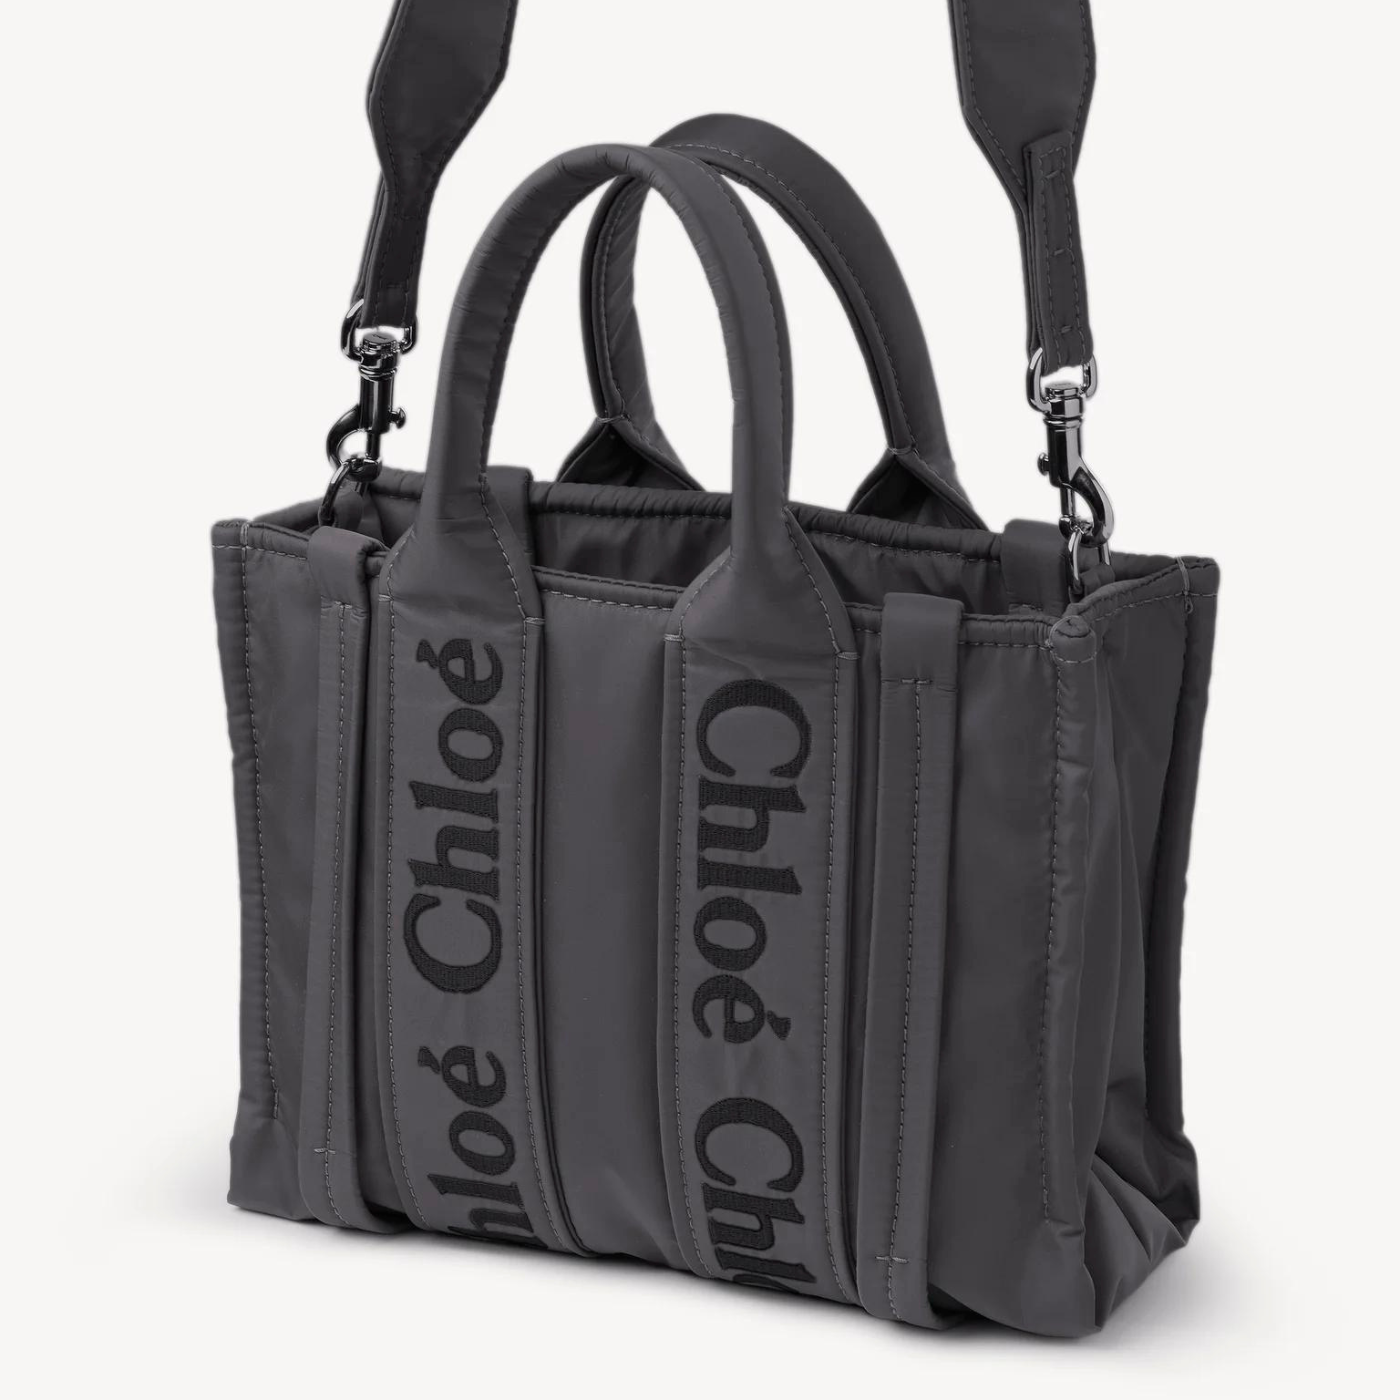 Woody Small Nylon Tote Bag in Elephant Grey Handbags CHLOE - LOLAMIR